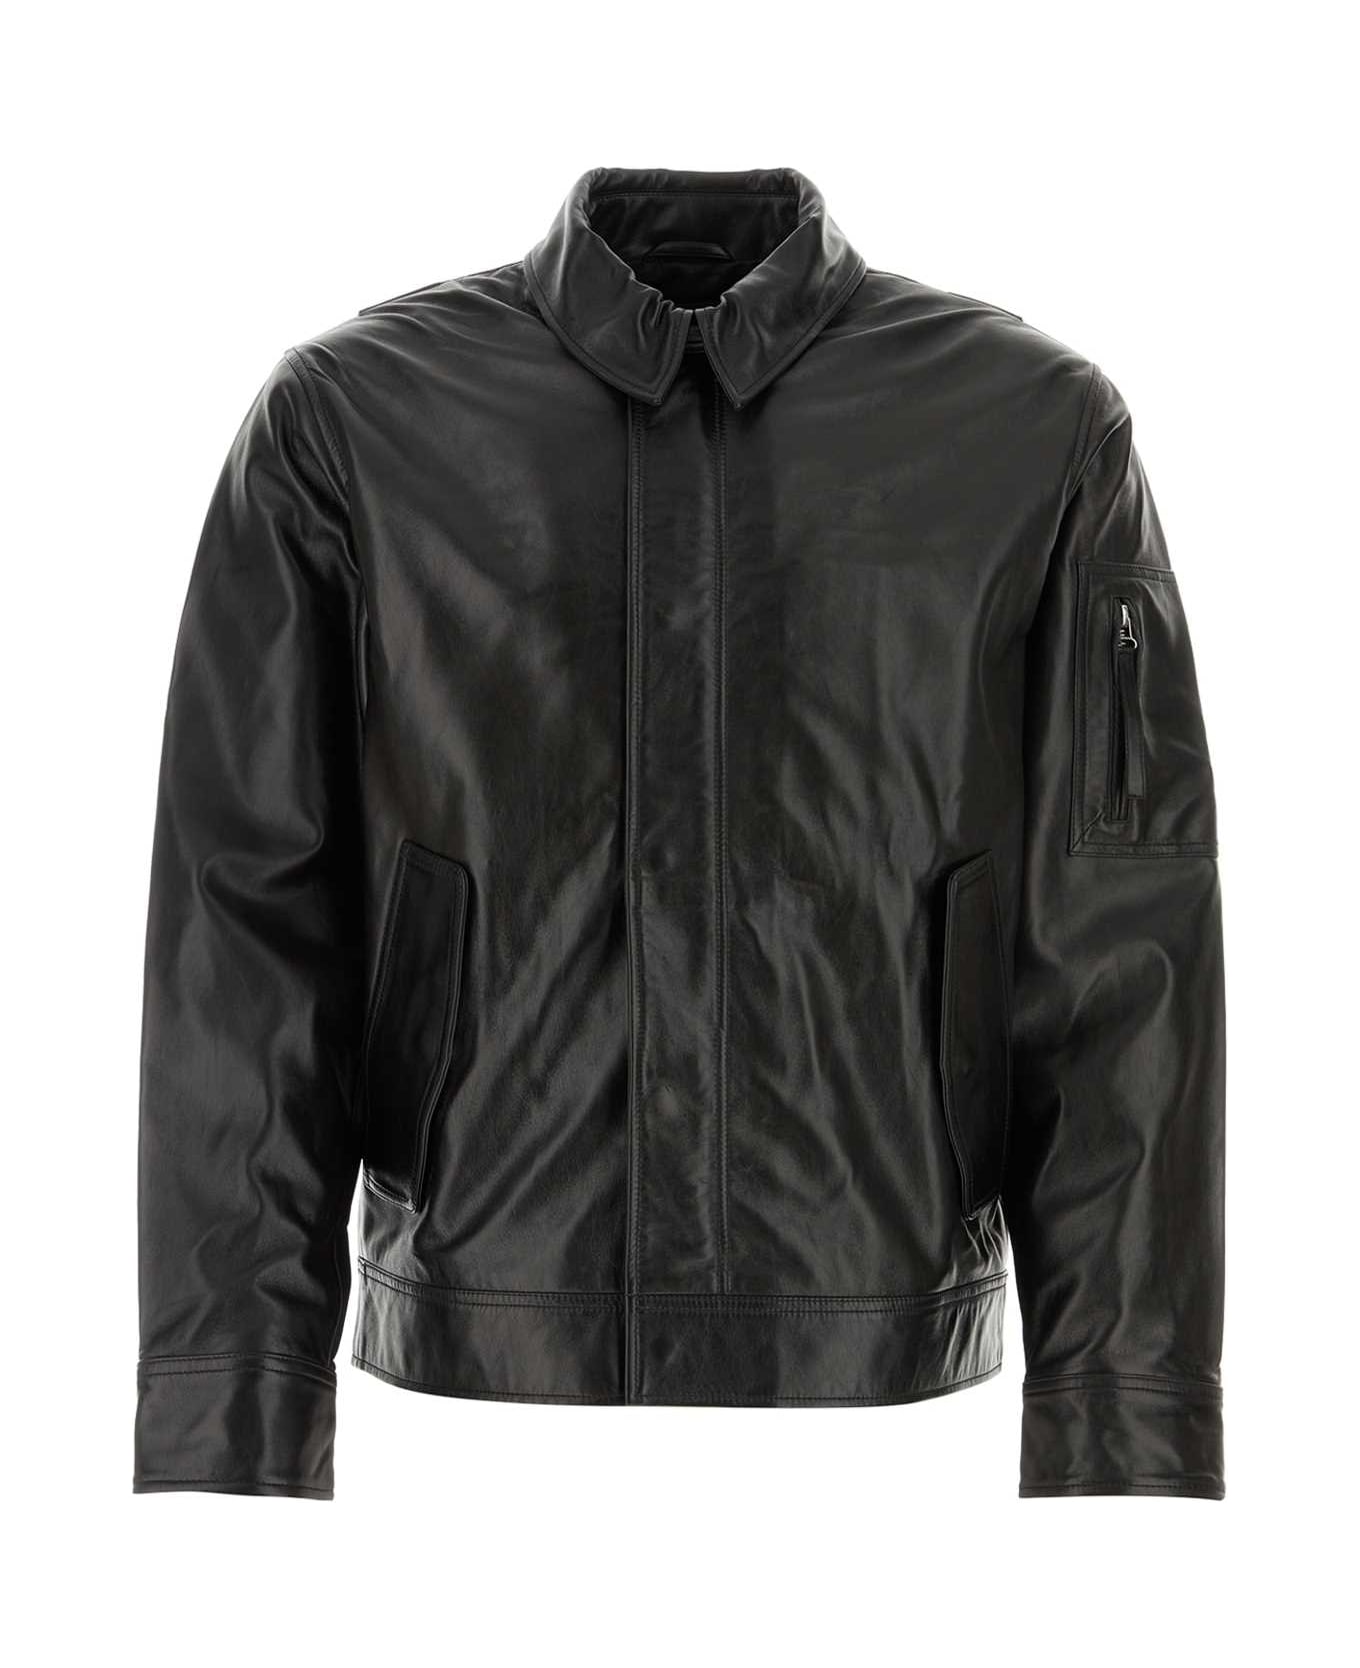 Helmut Lang Black Leather Jacket - Black レザージャケット